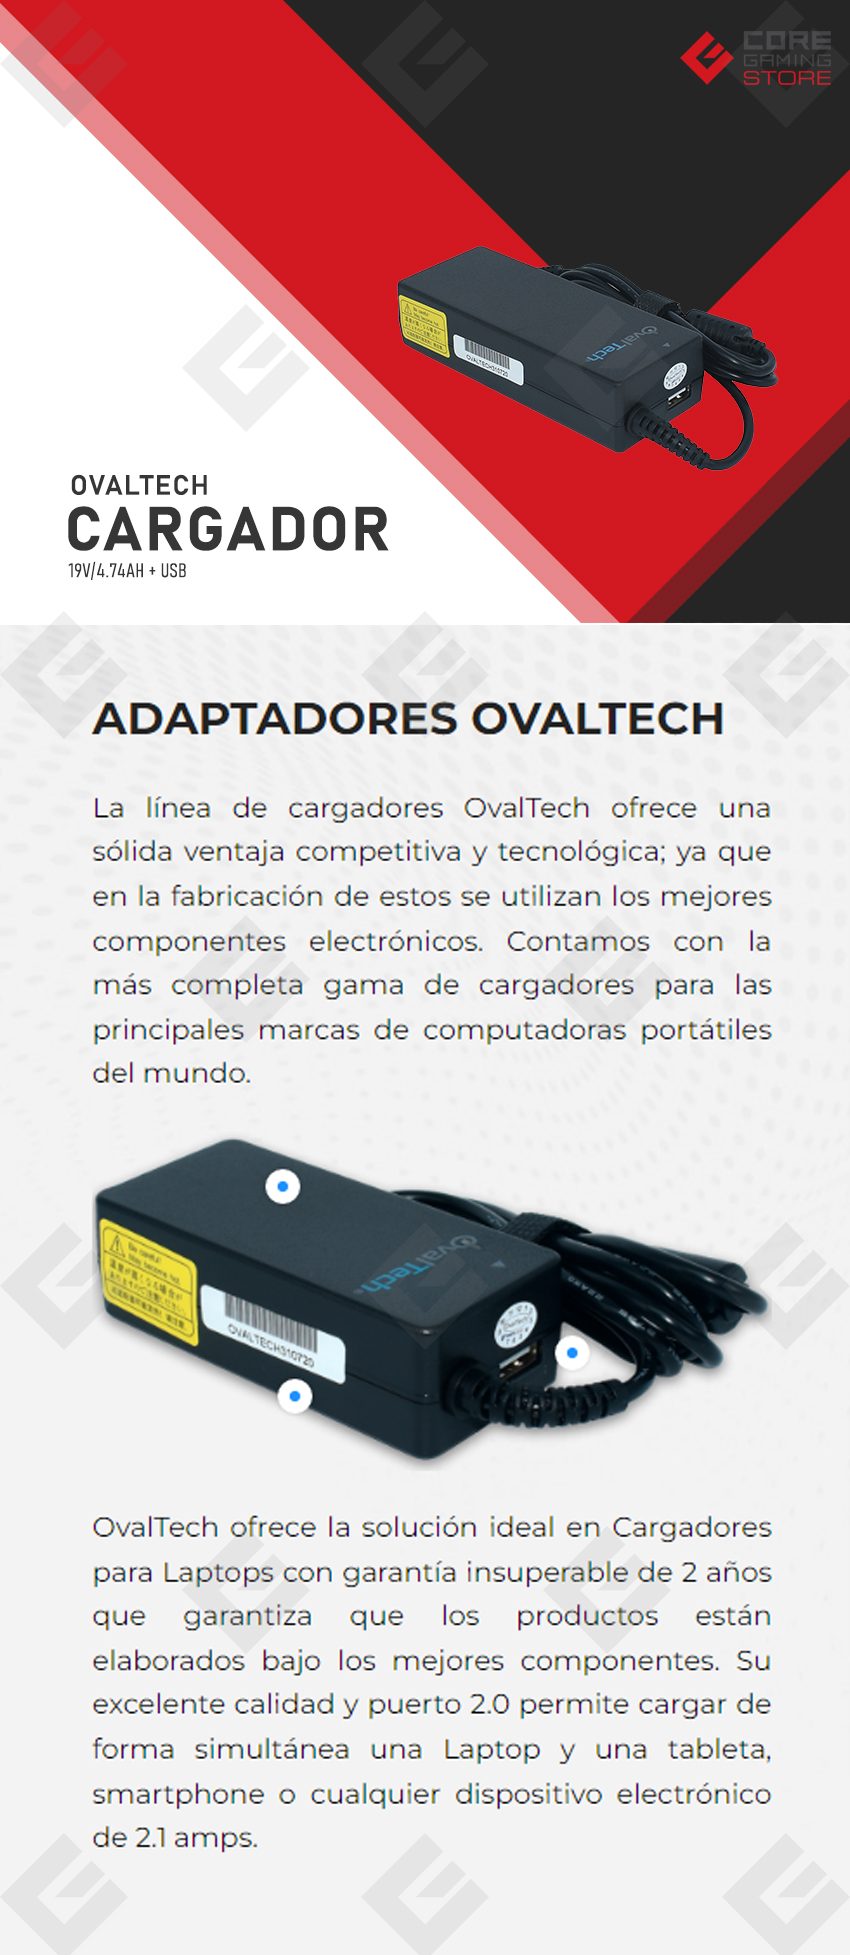 Cargador universal para laptop Ovaltech 19V/4.74AH + USB  - OTAC-E51